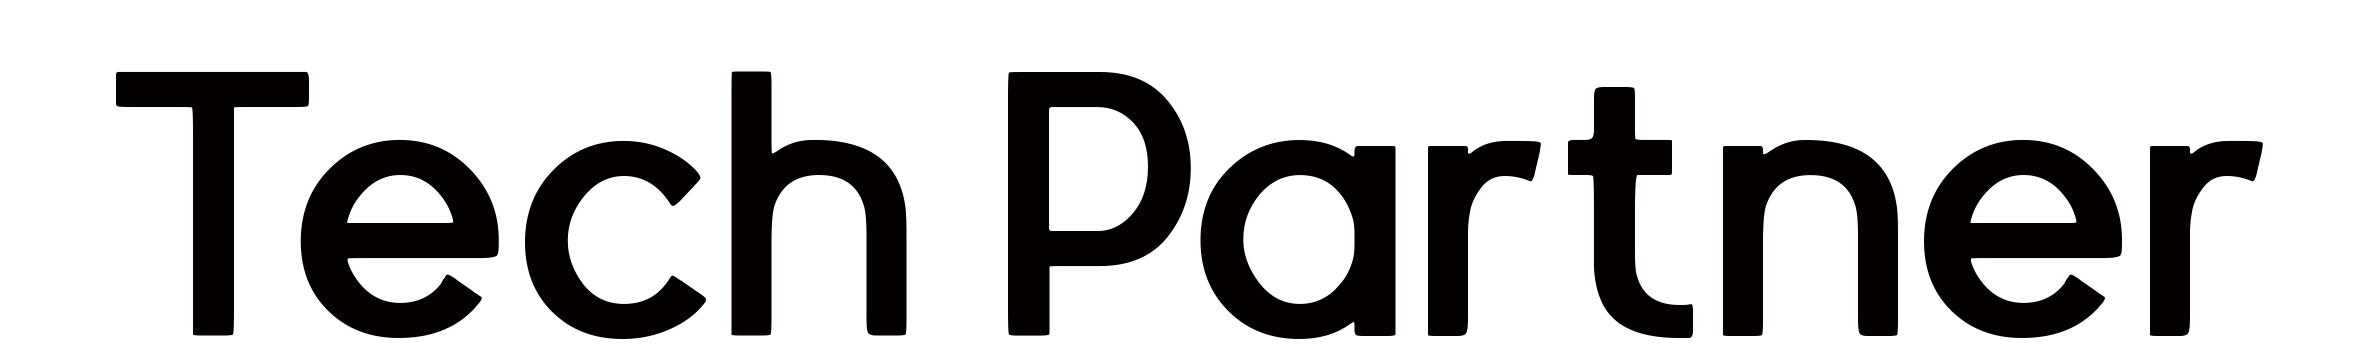 tech partner logo black